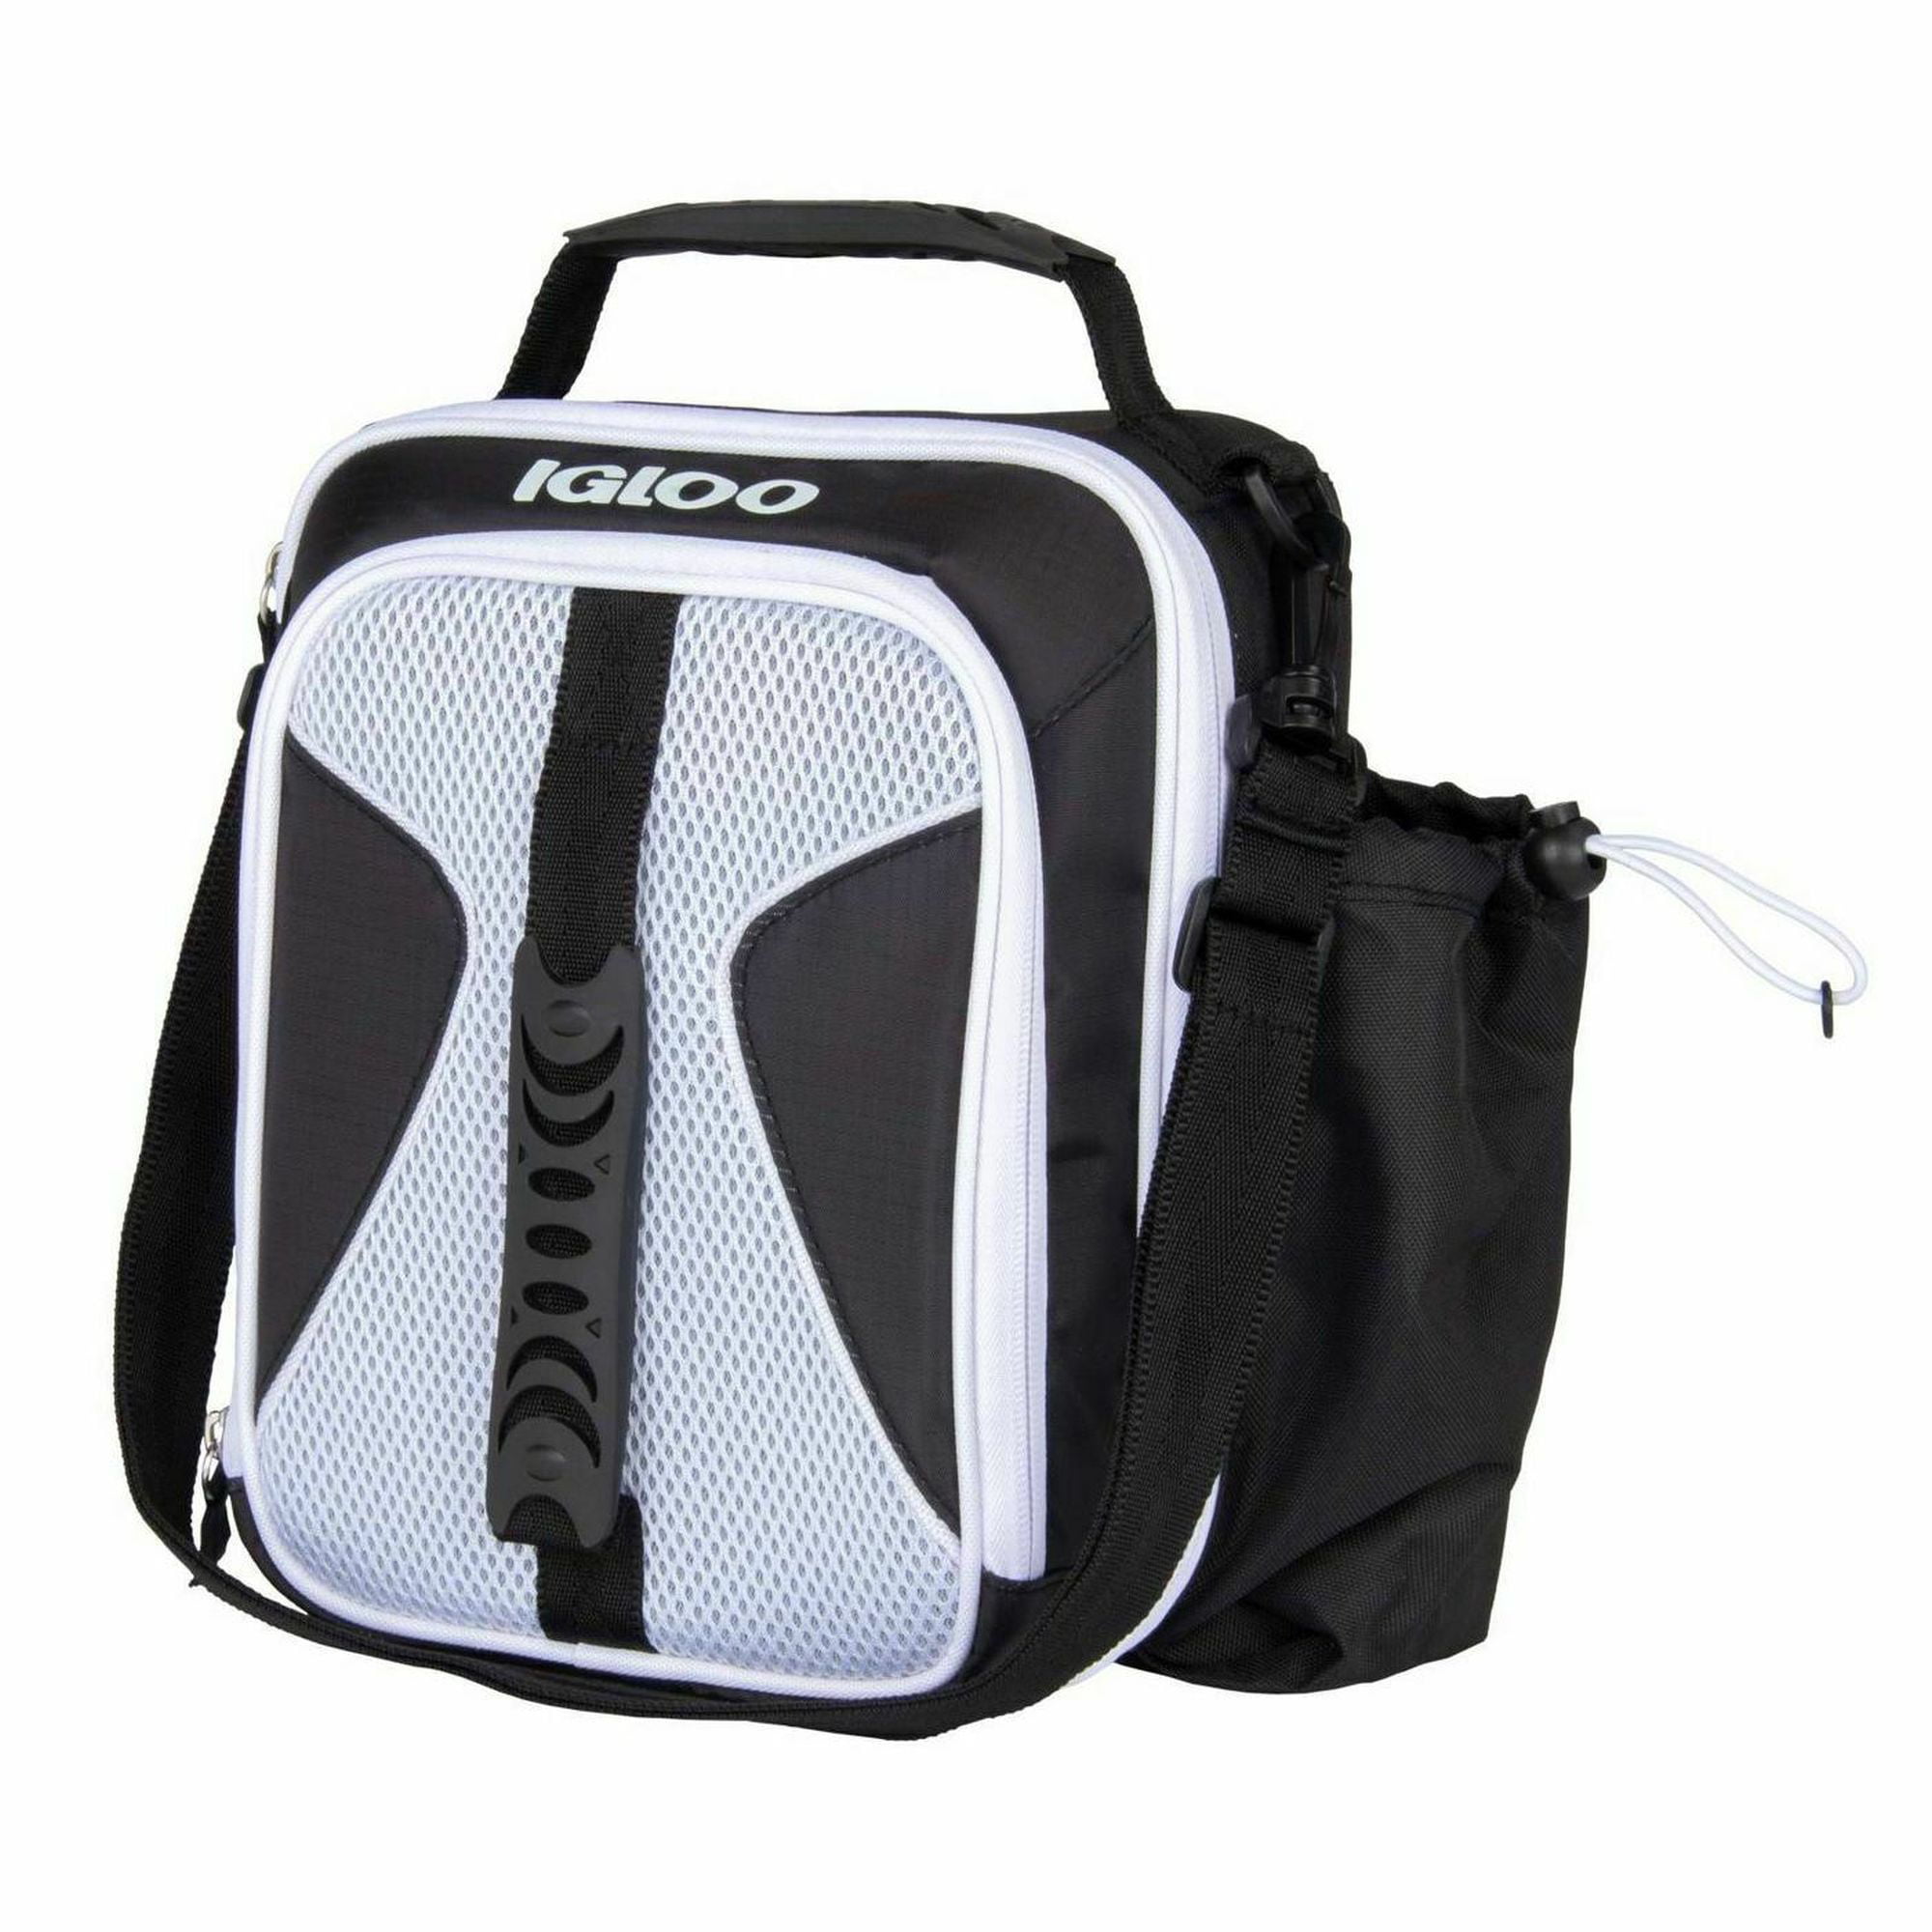 igloo lunch backpack